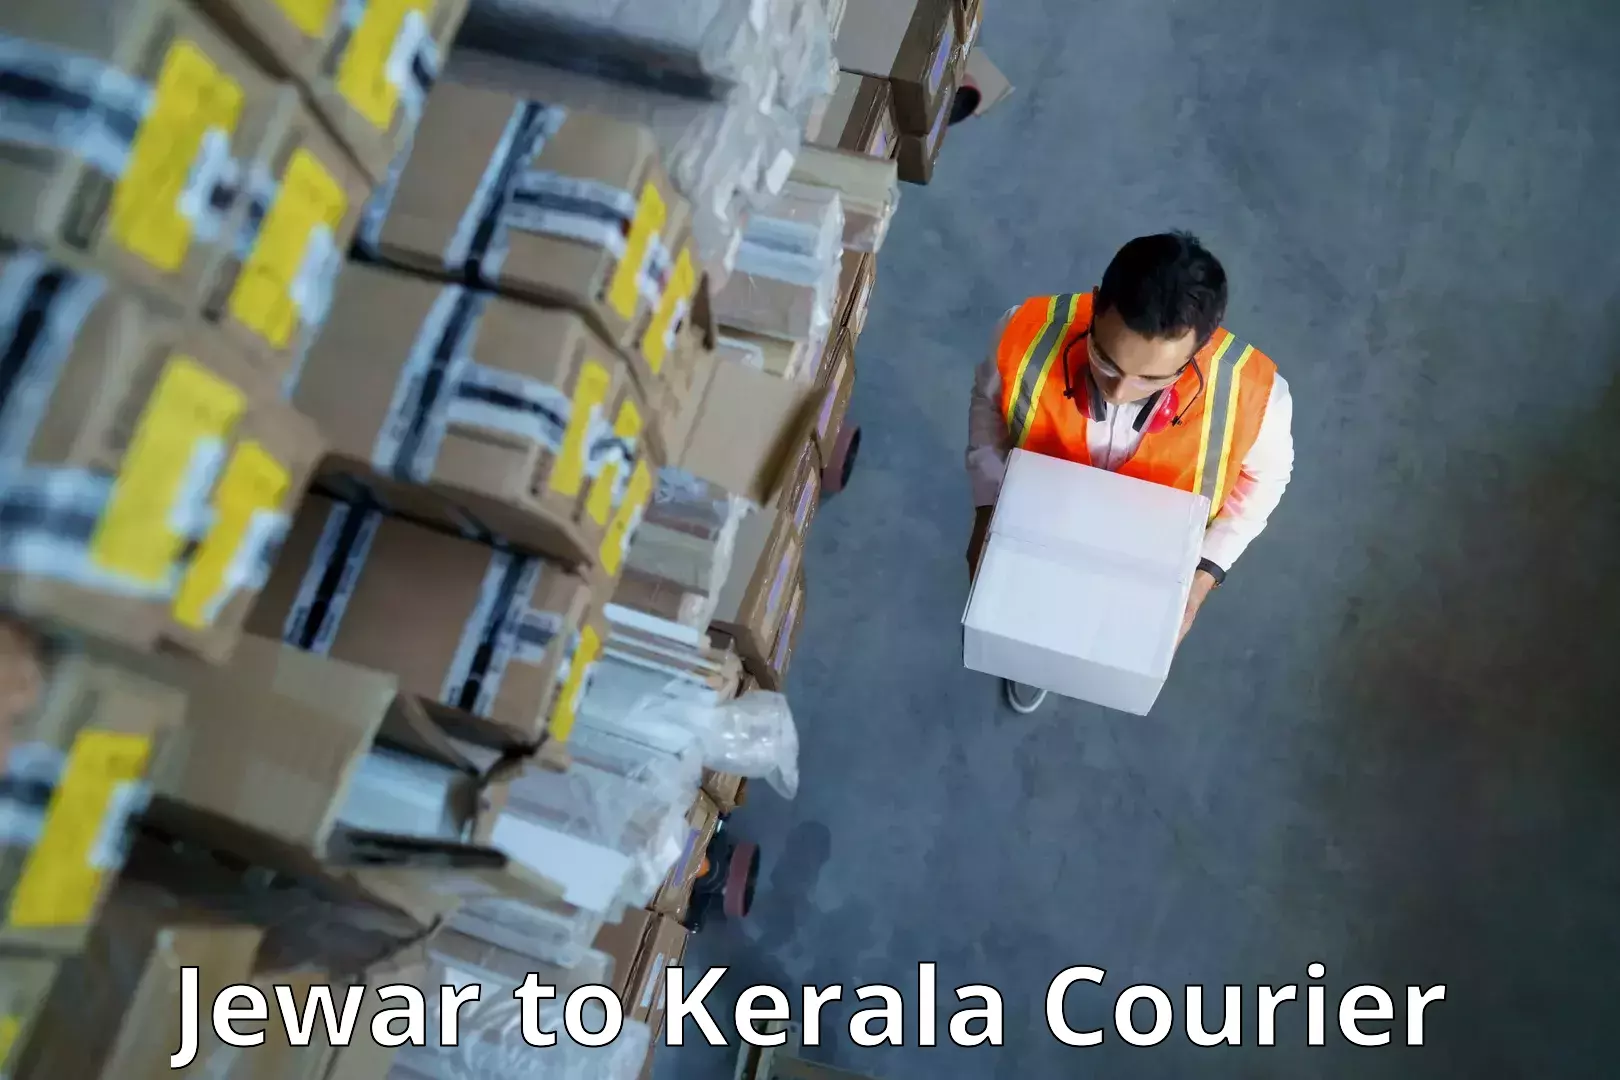 Courier service comparison Jewar to Perumbavoor